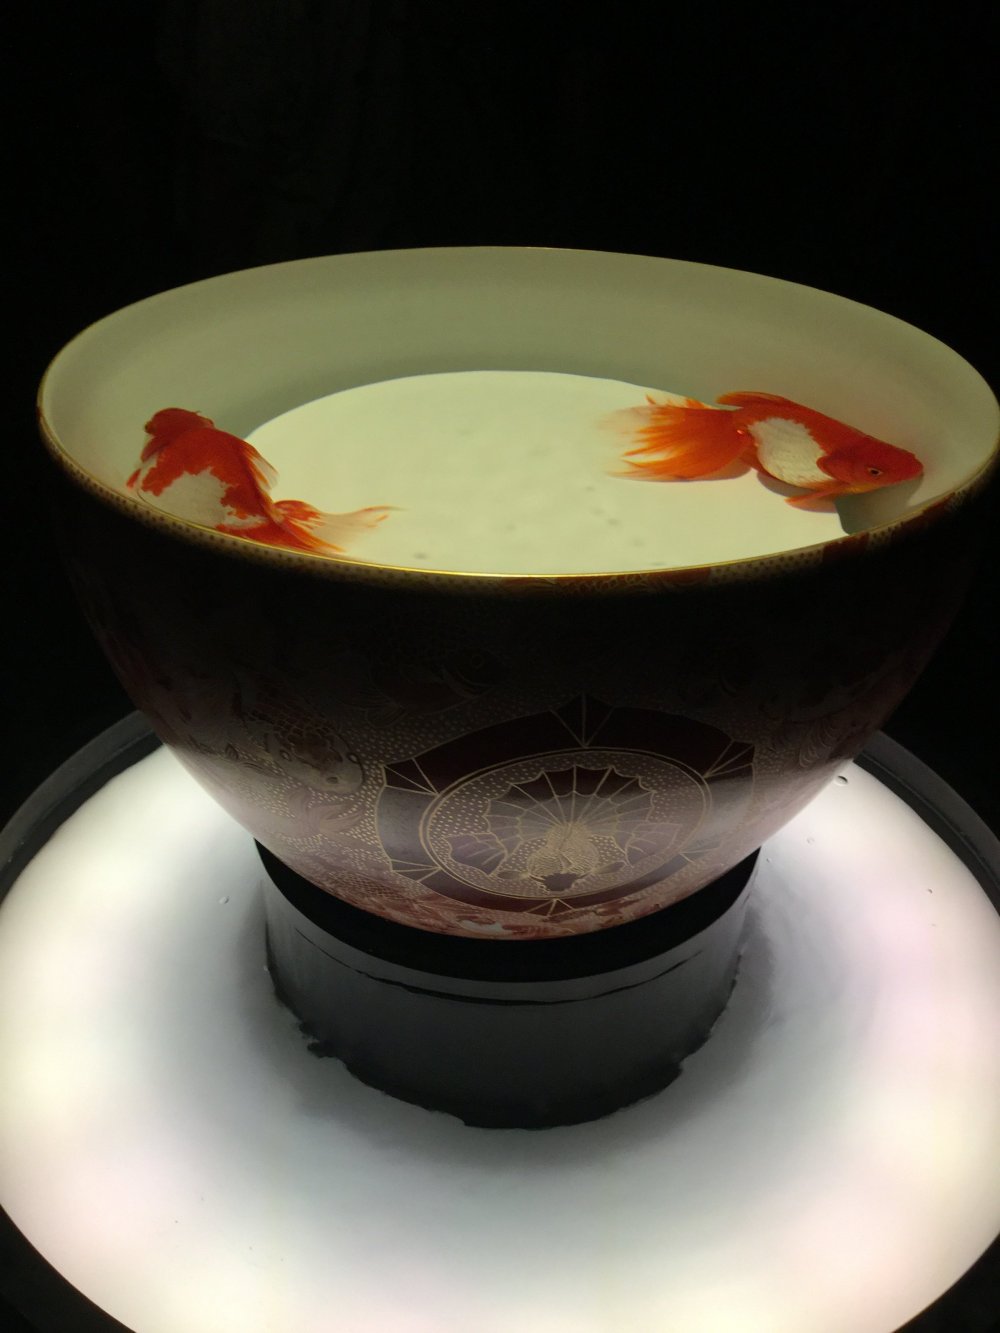 Two goldfish in a huge teacup -- elegance.